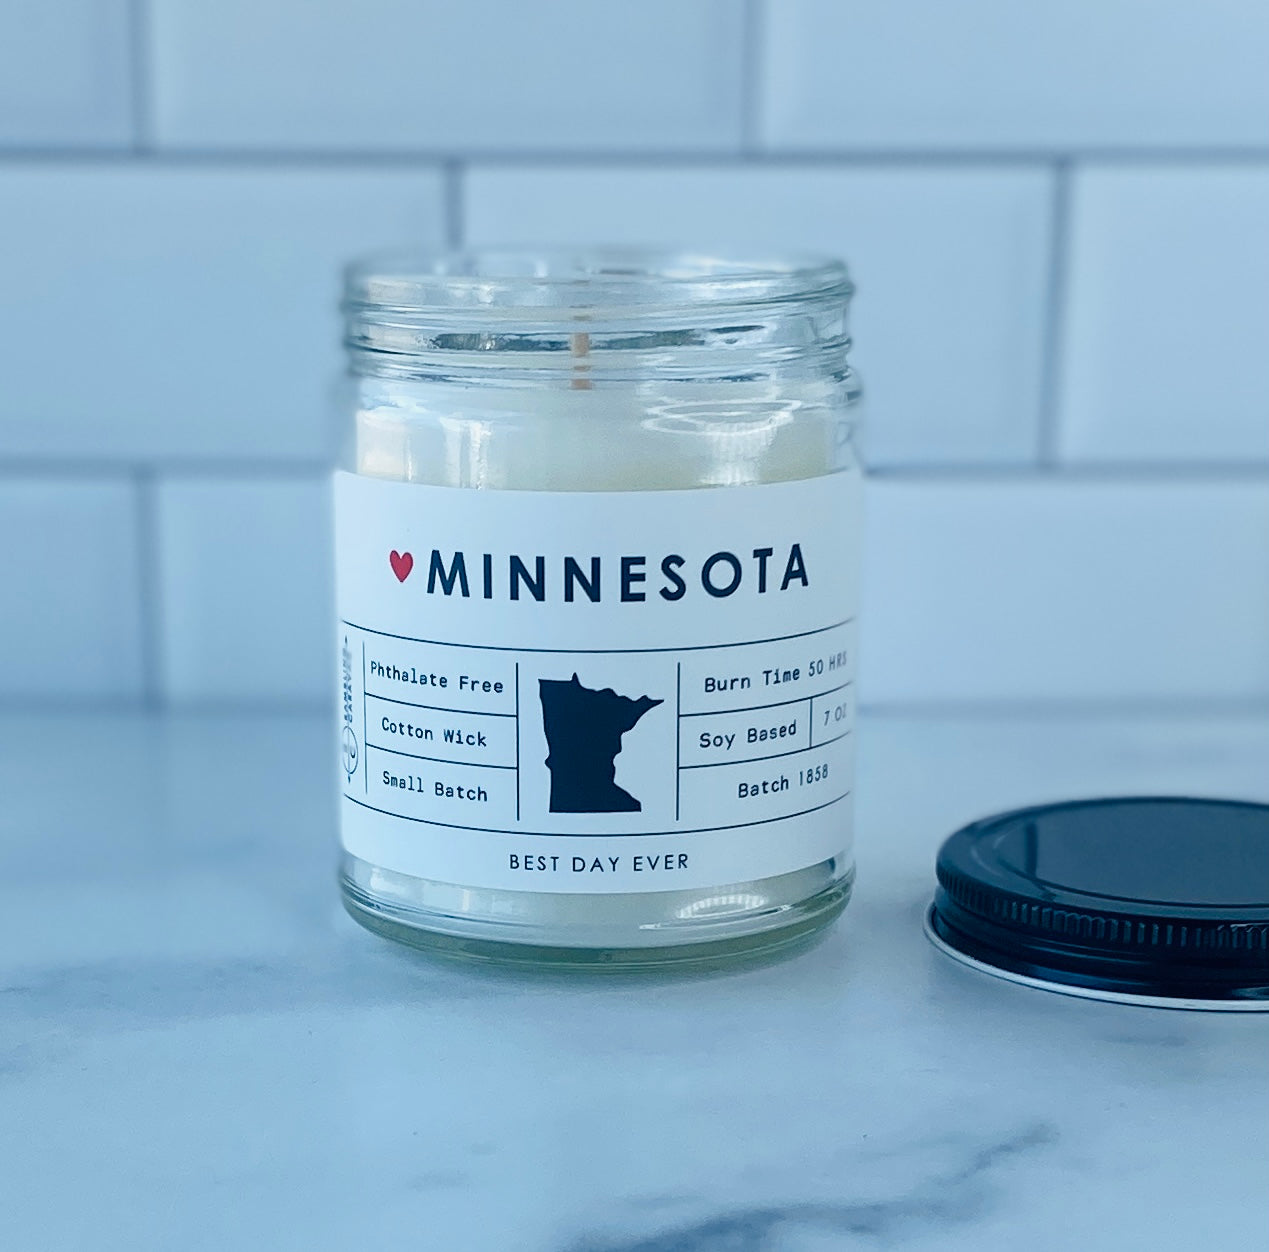 Minnesota Candle